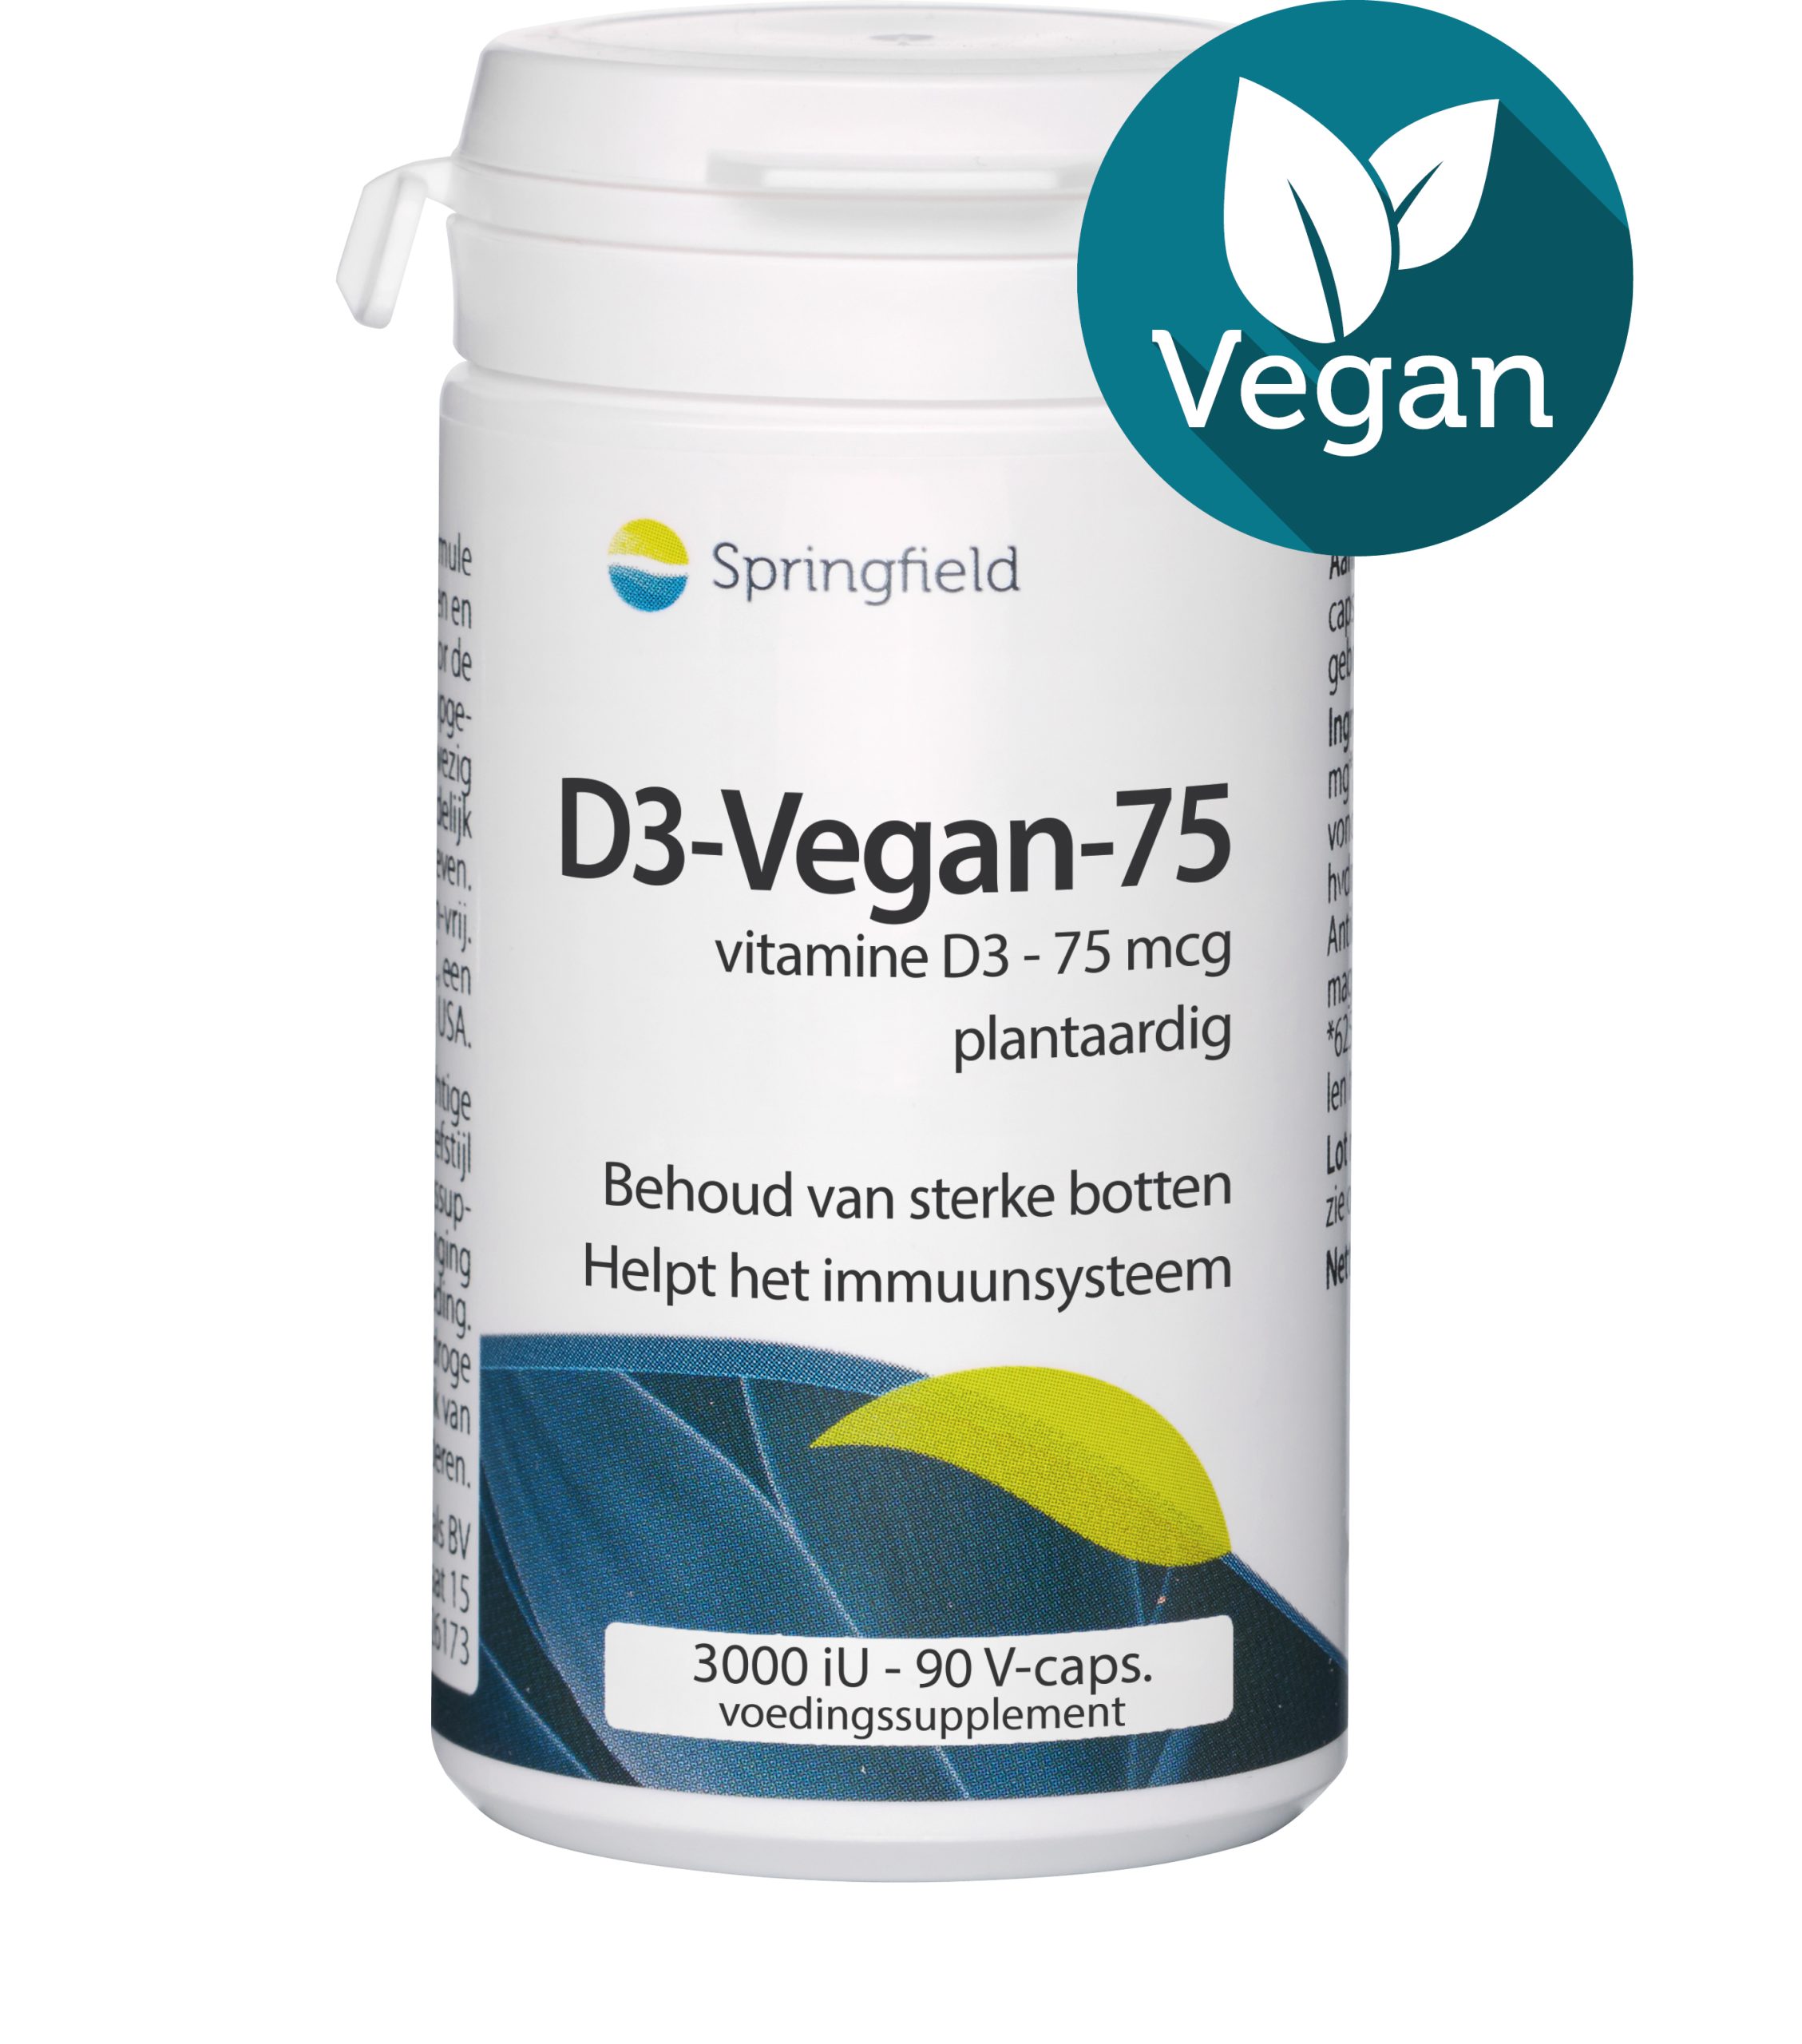 D3-Vegan-75 - 75 mcg vitamine-D3 uit algen - plantaardig 90 V-capsules